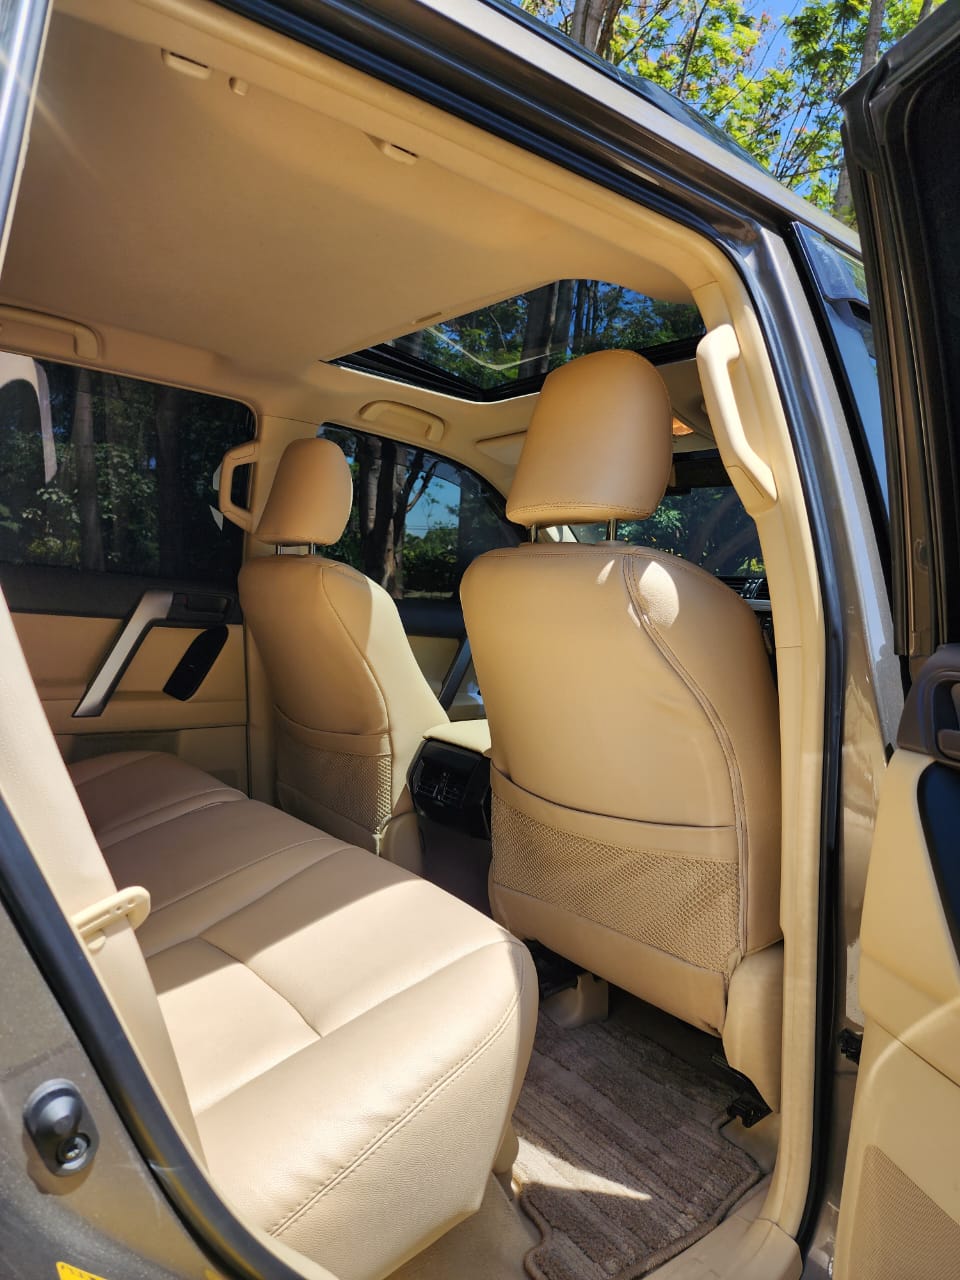 Toyota Prado 2016 DIESEL Sunroof 7 seater Trade in OK